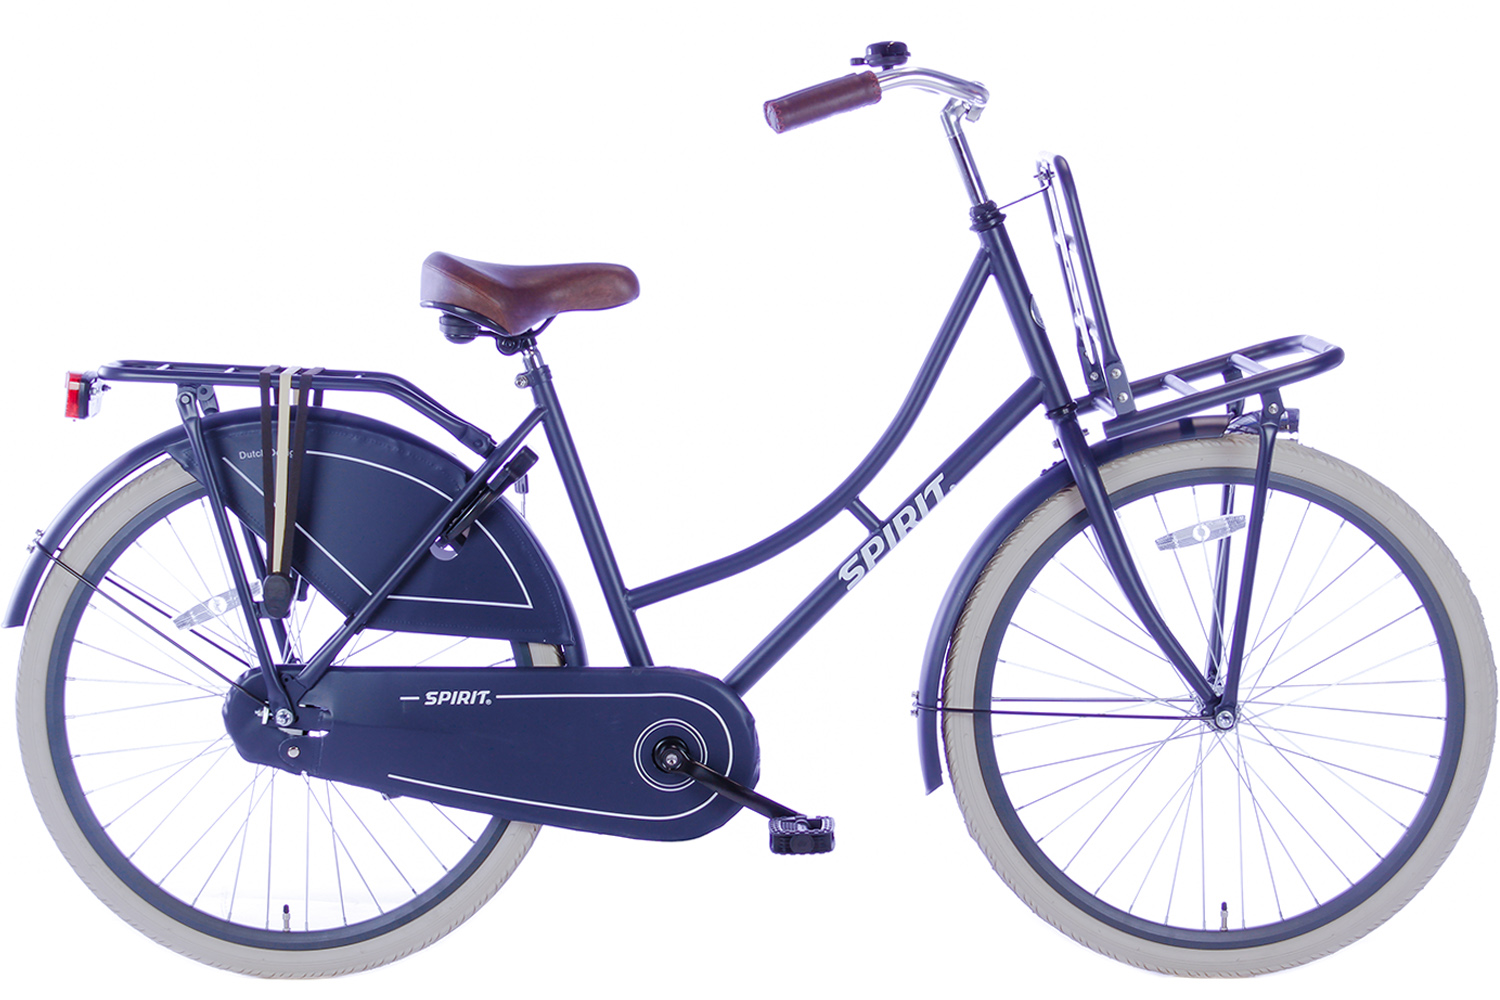 Arne Perth druiven Spirit Omafiets Jeans-Blauw 26 inch(wordt 100% rijklaar geleverd) - Bike 2  Bike